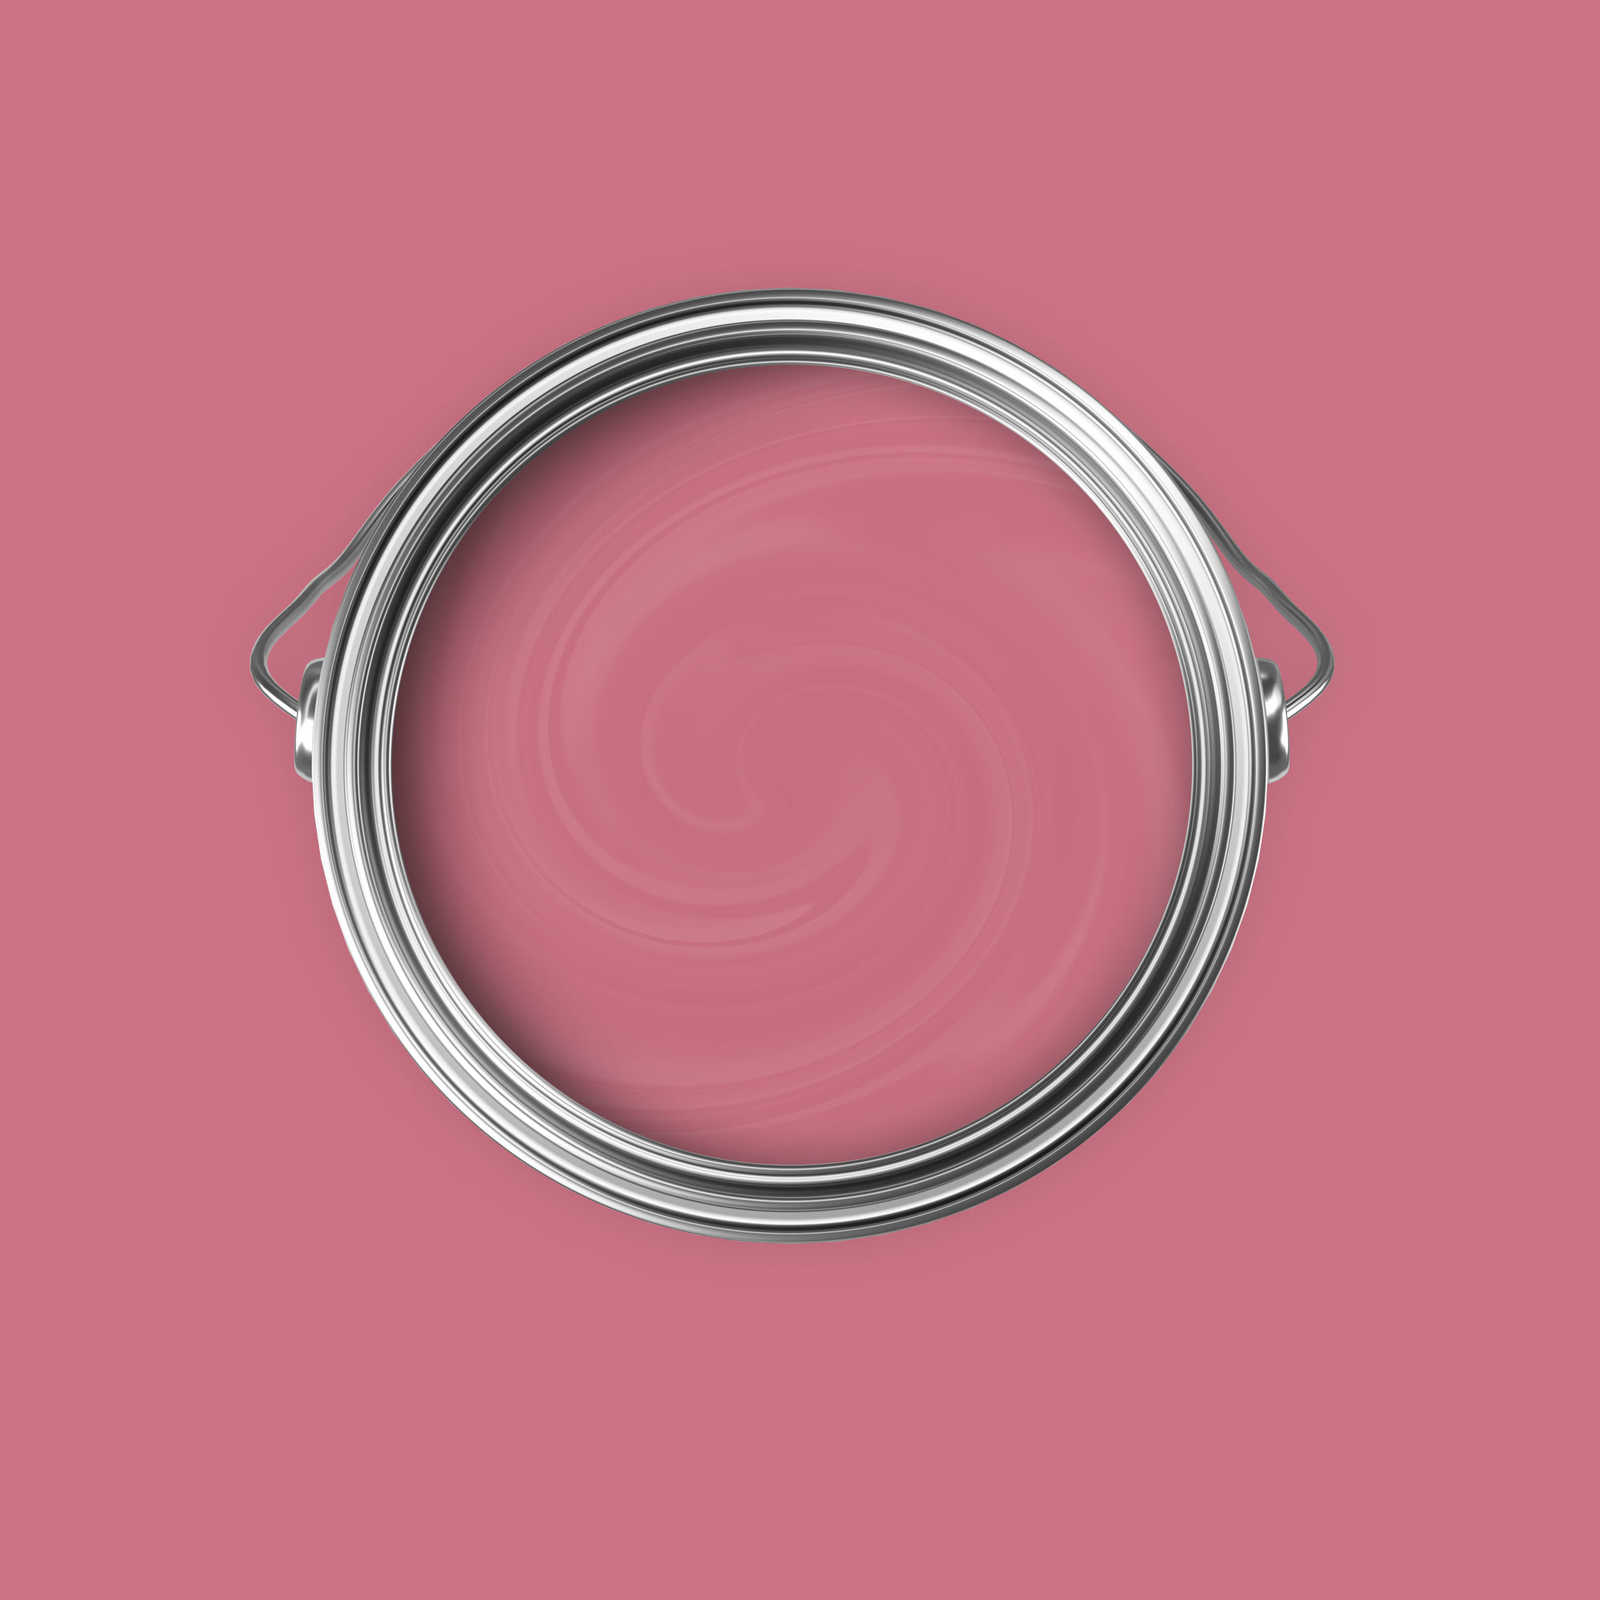             Premium Muurverf Refreshing Dark Pink »Blooming Blossom« NW1018 – 5 liter
        